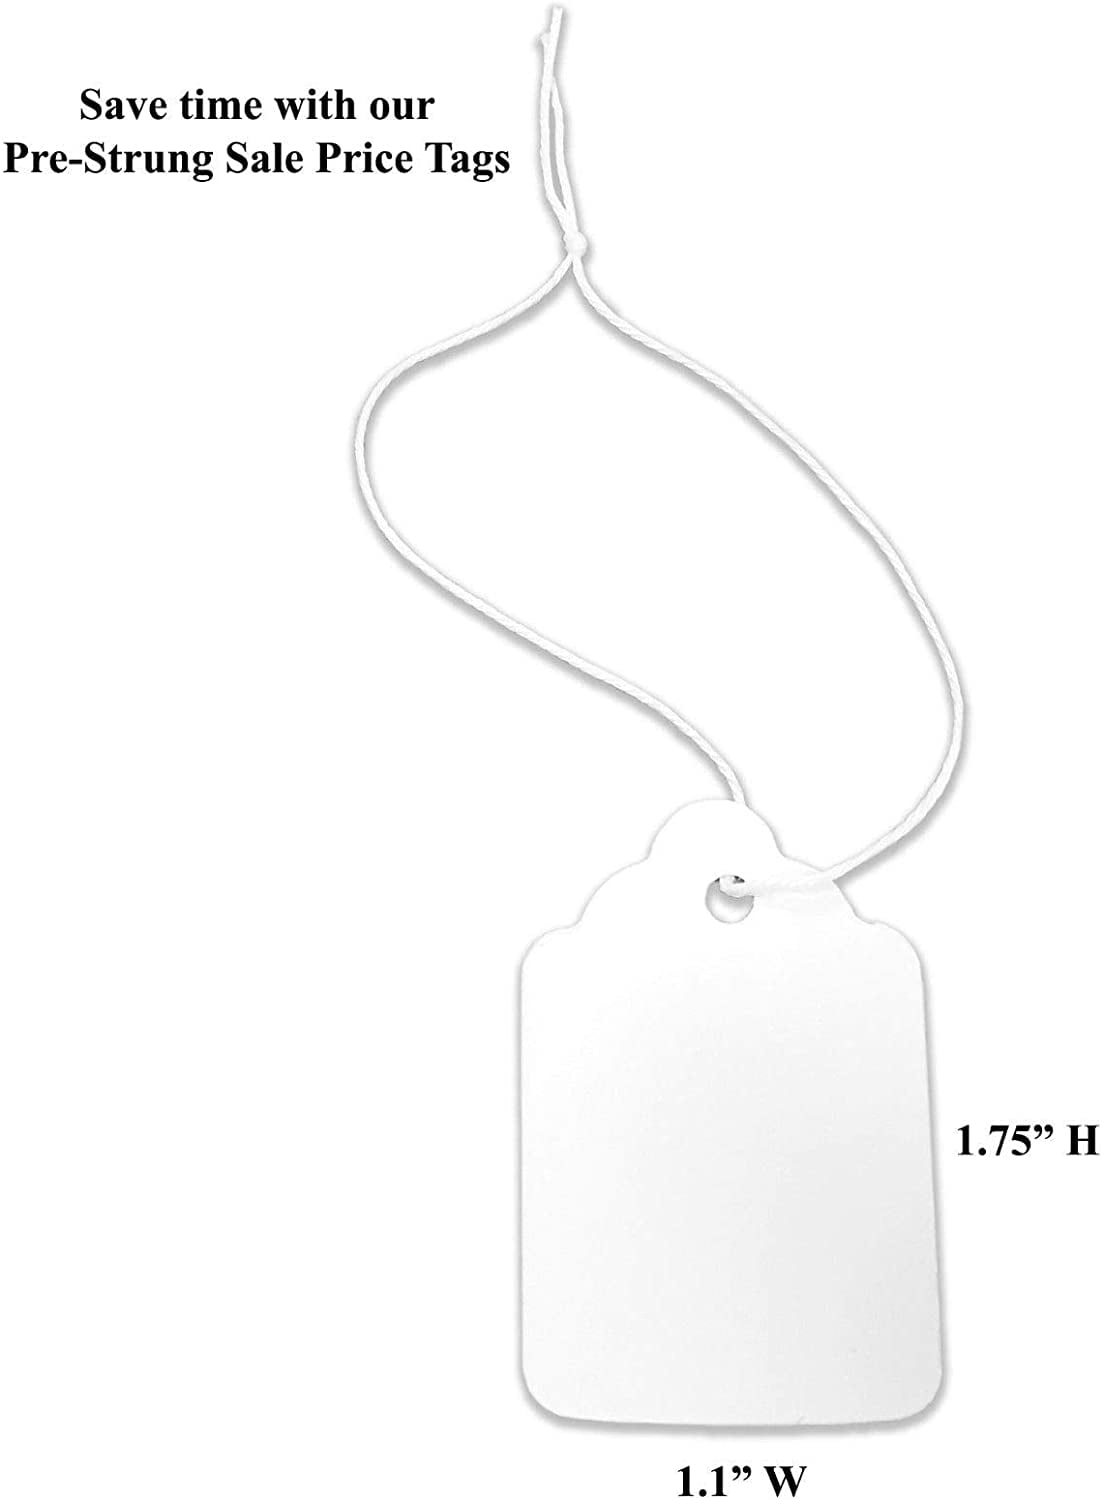 Wholesale #5 Fluorescent Neon Blank Strung Merchandise Price Tags 1.1" x 1.75" 